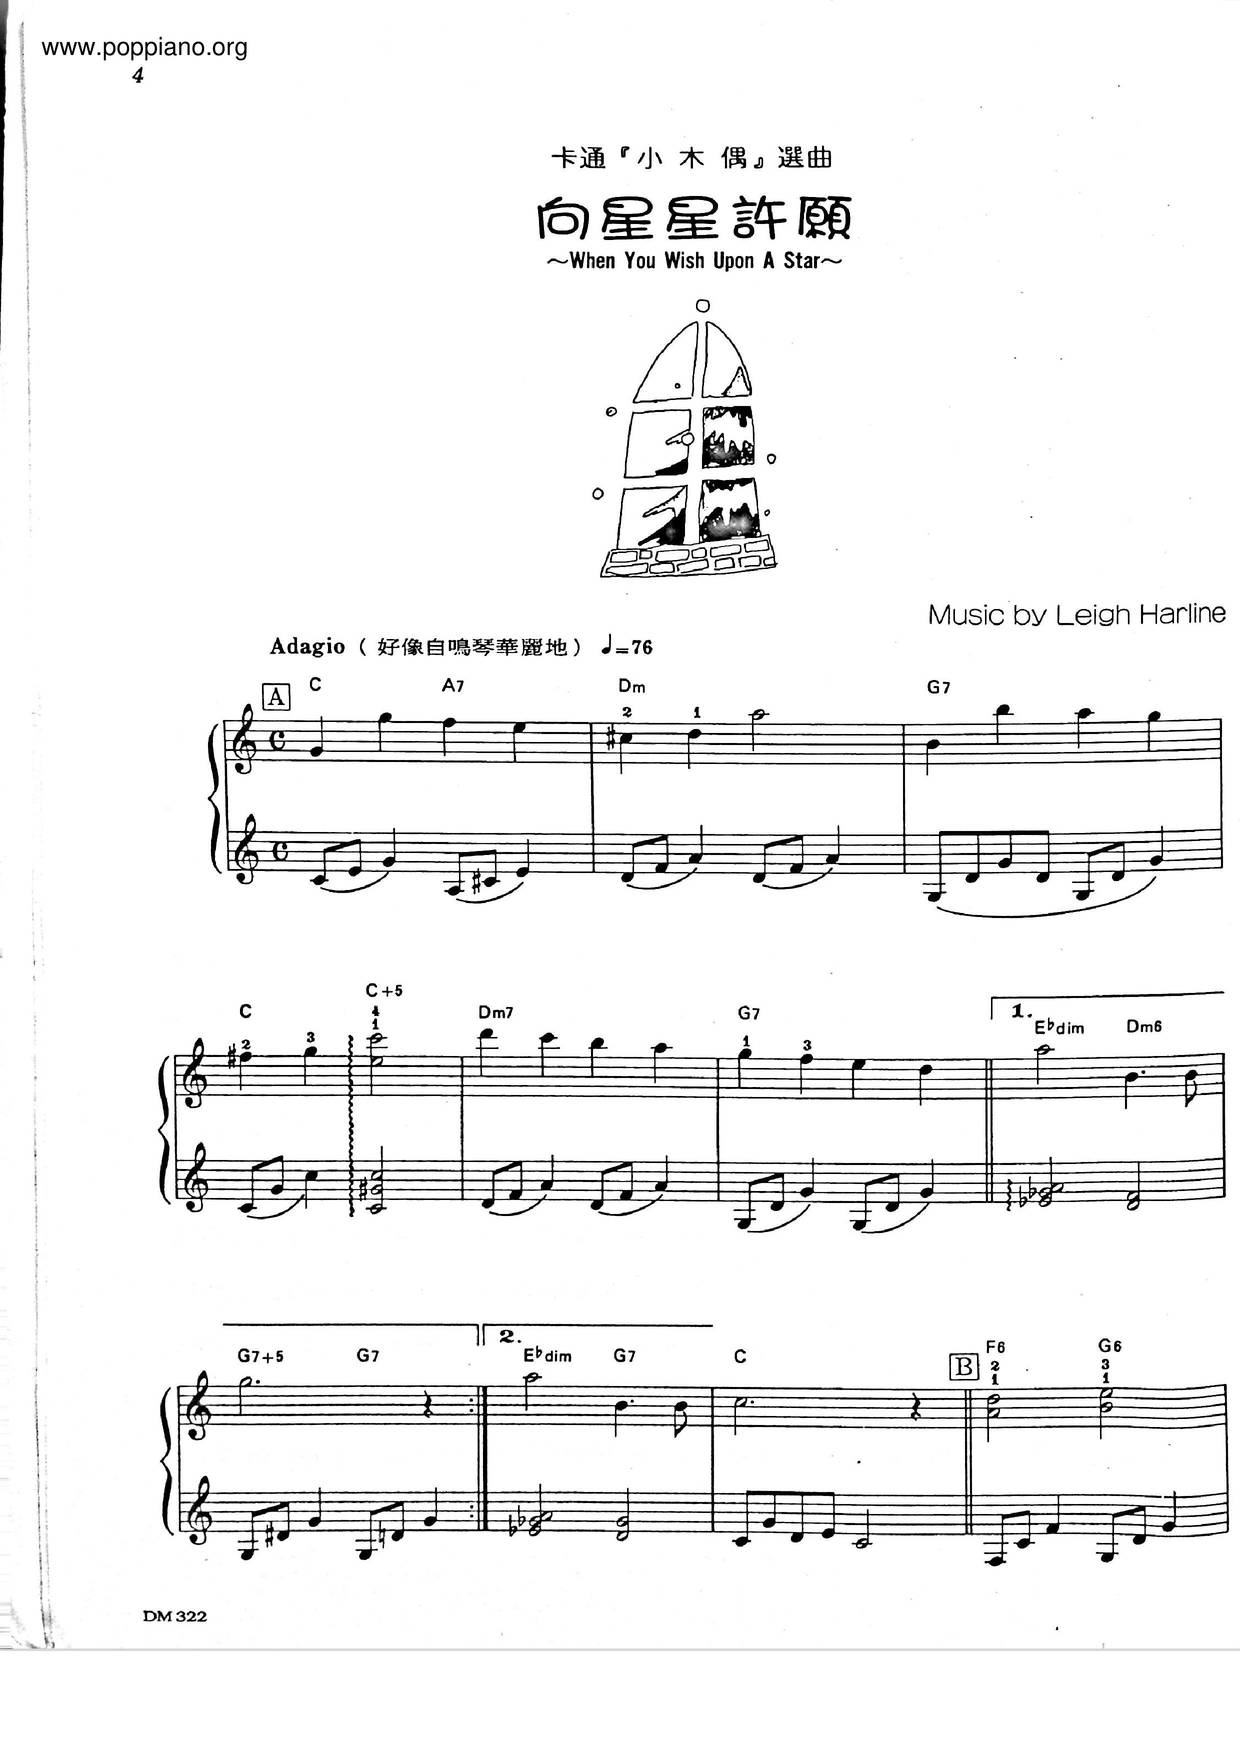 Pinocchio - When You Wish Upon a Star琴譜